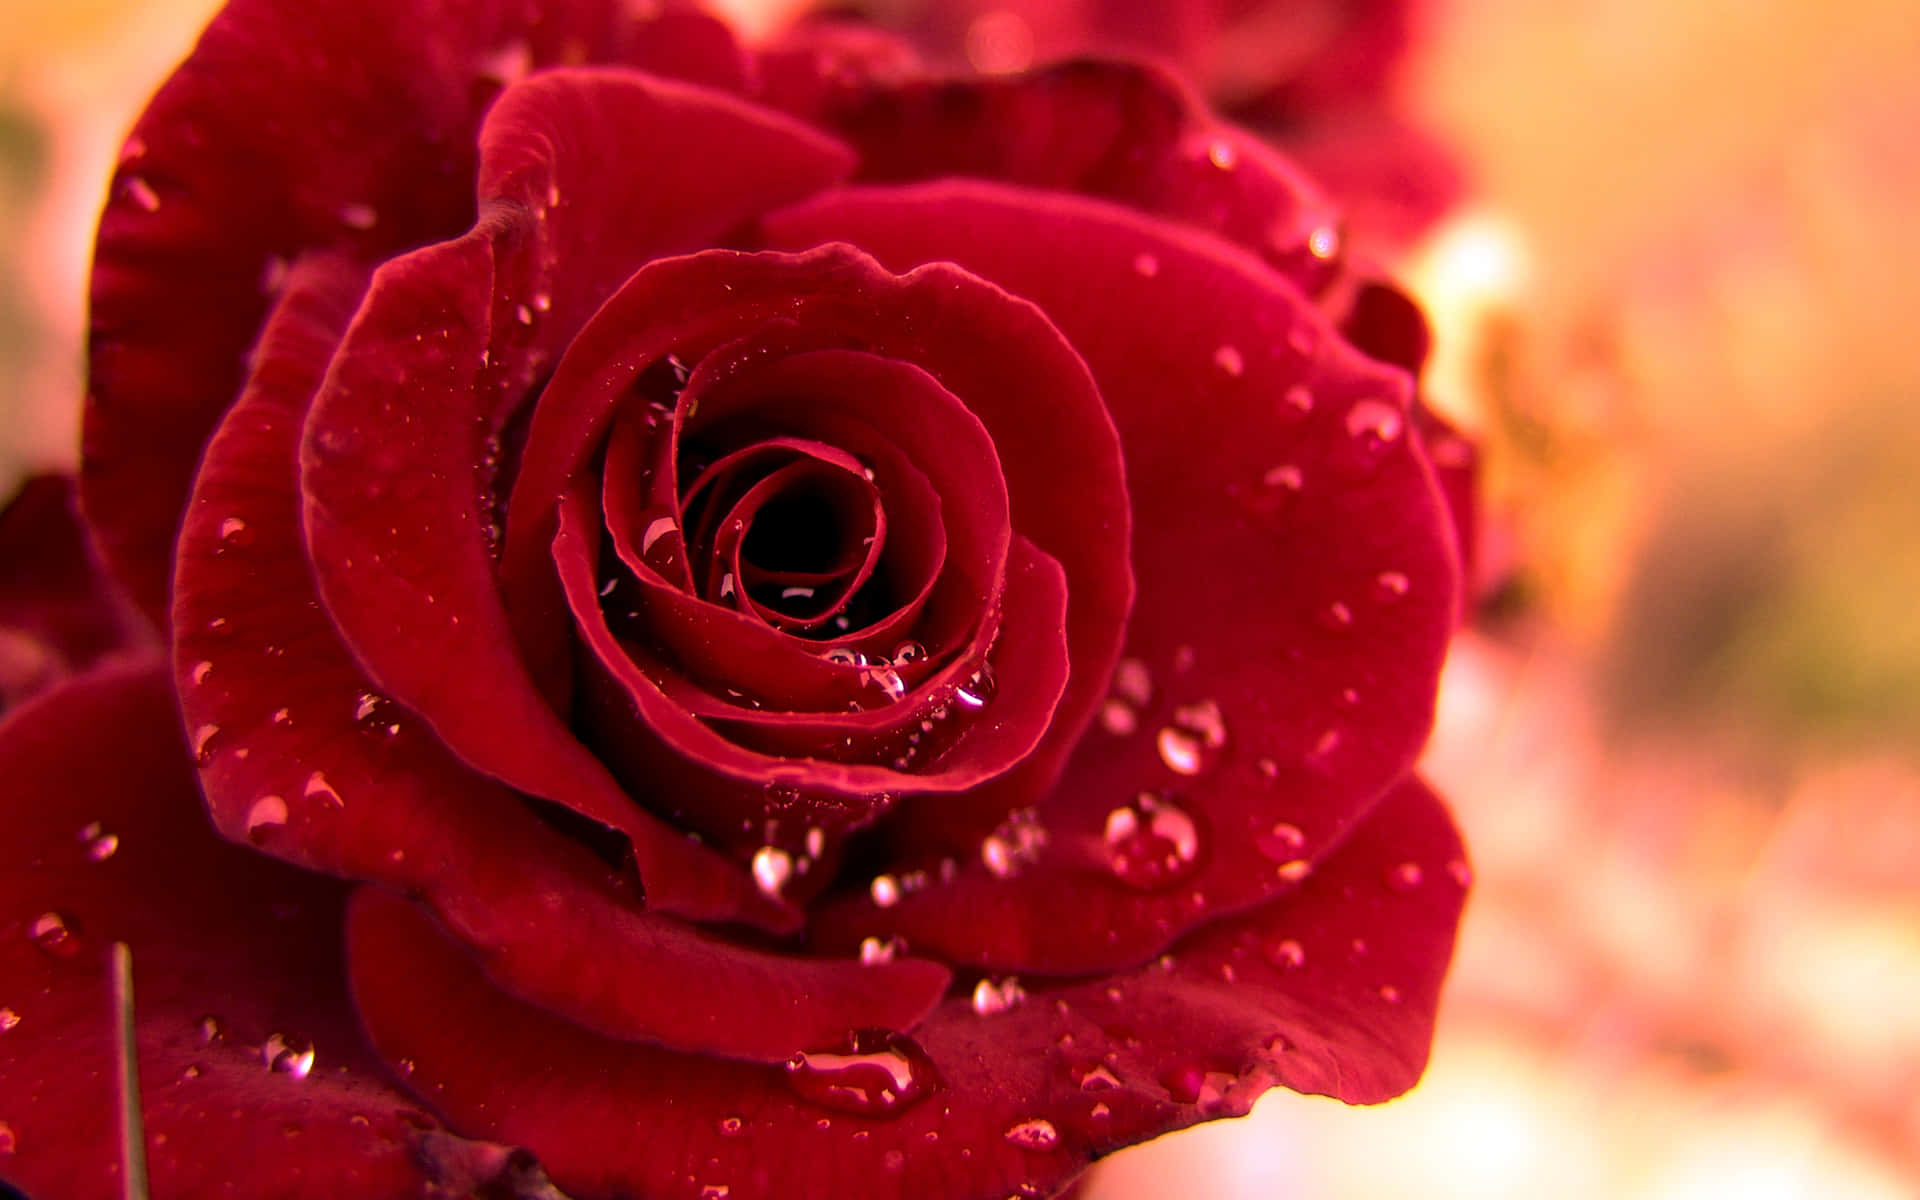 "A Rose, A Symbol Of Beauty"